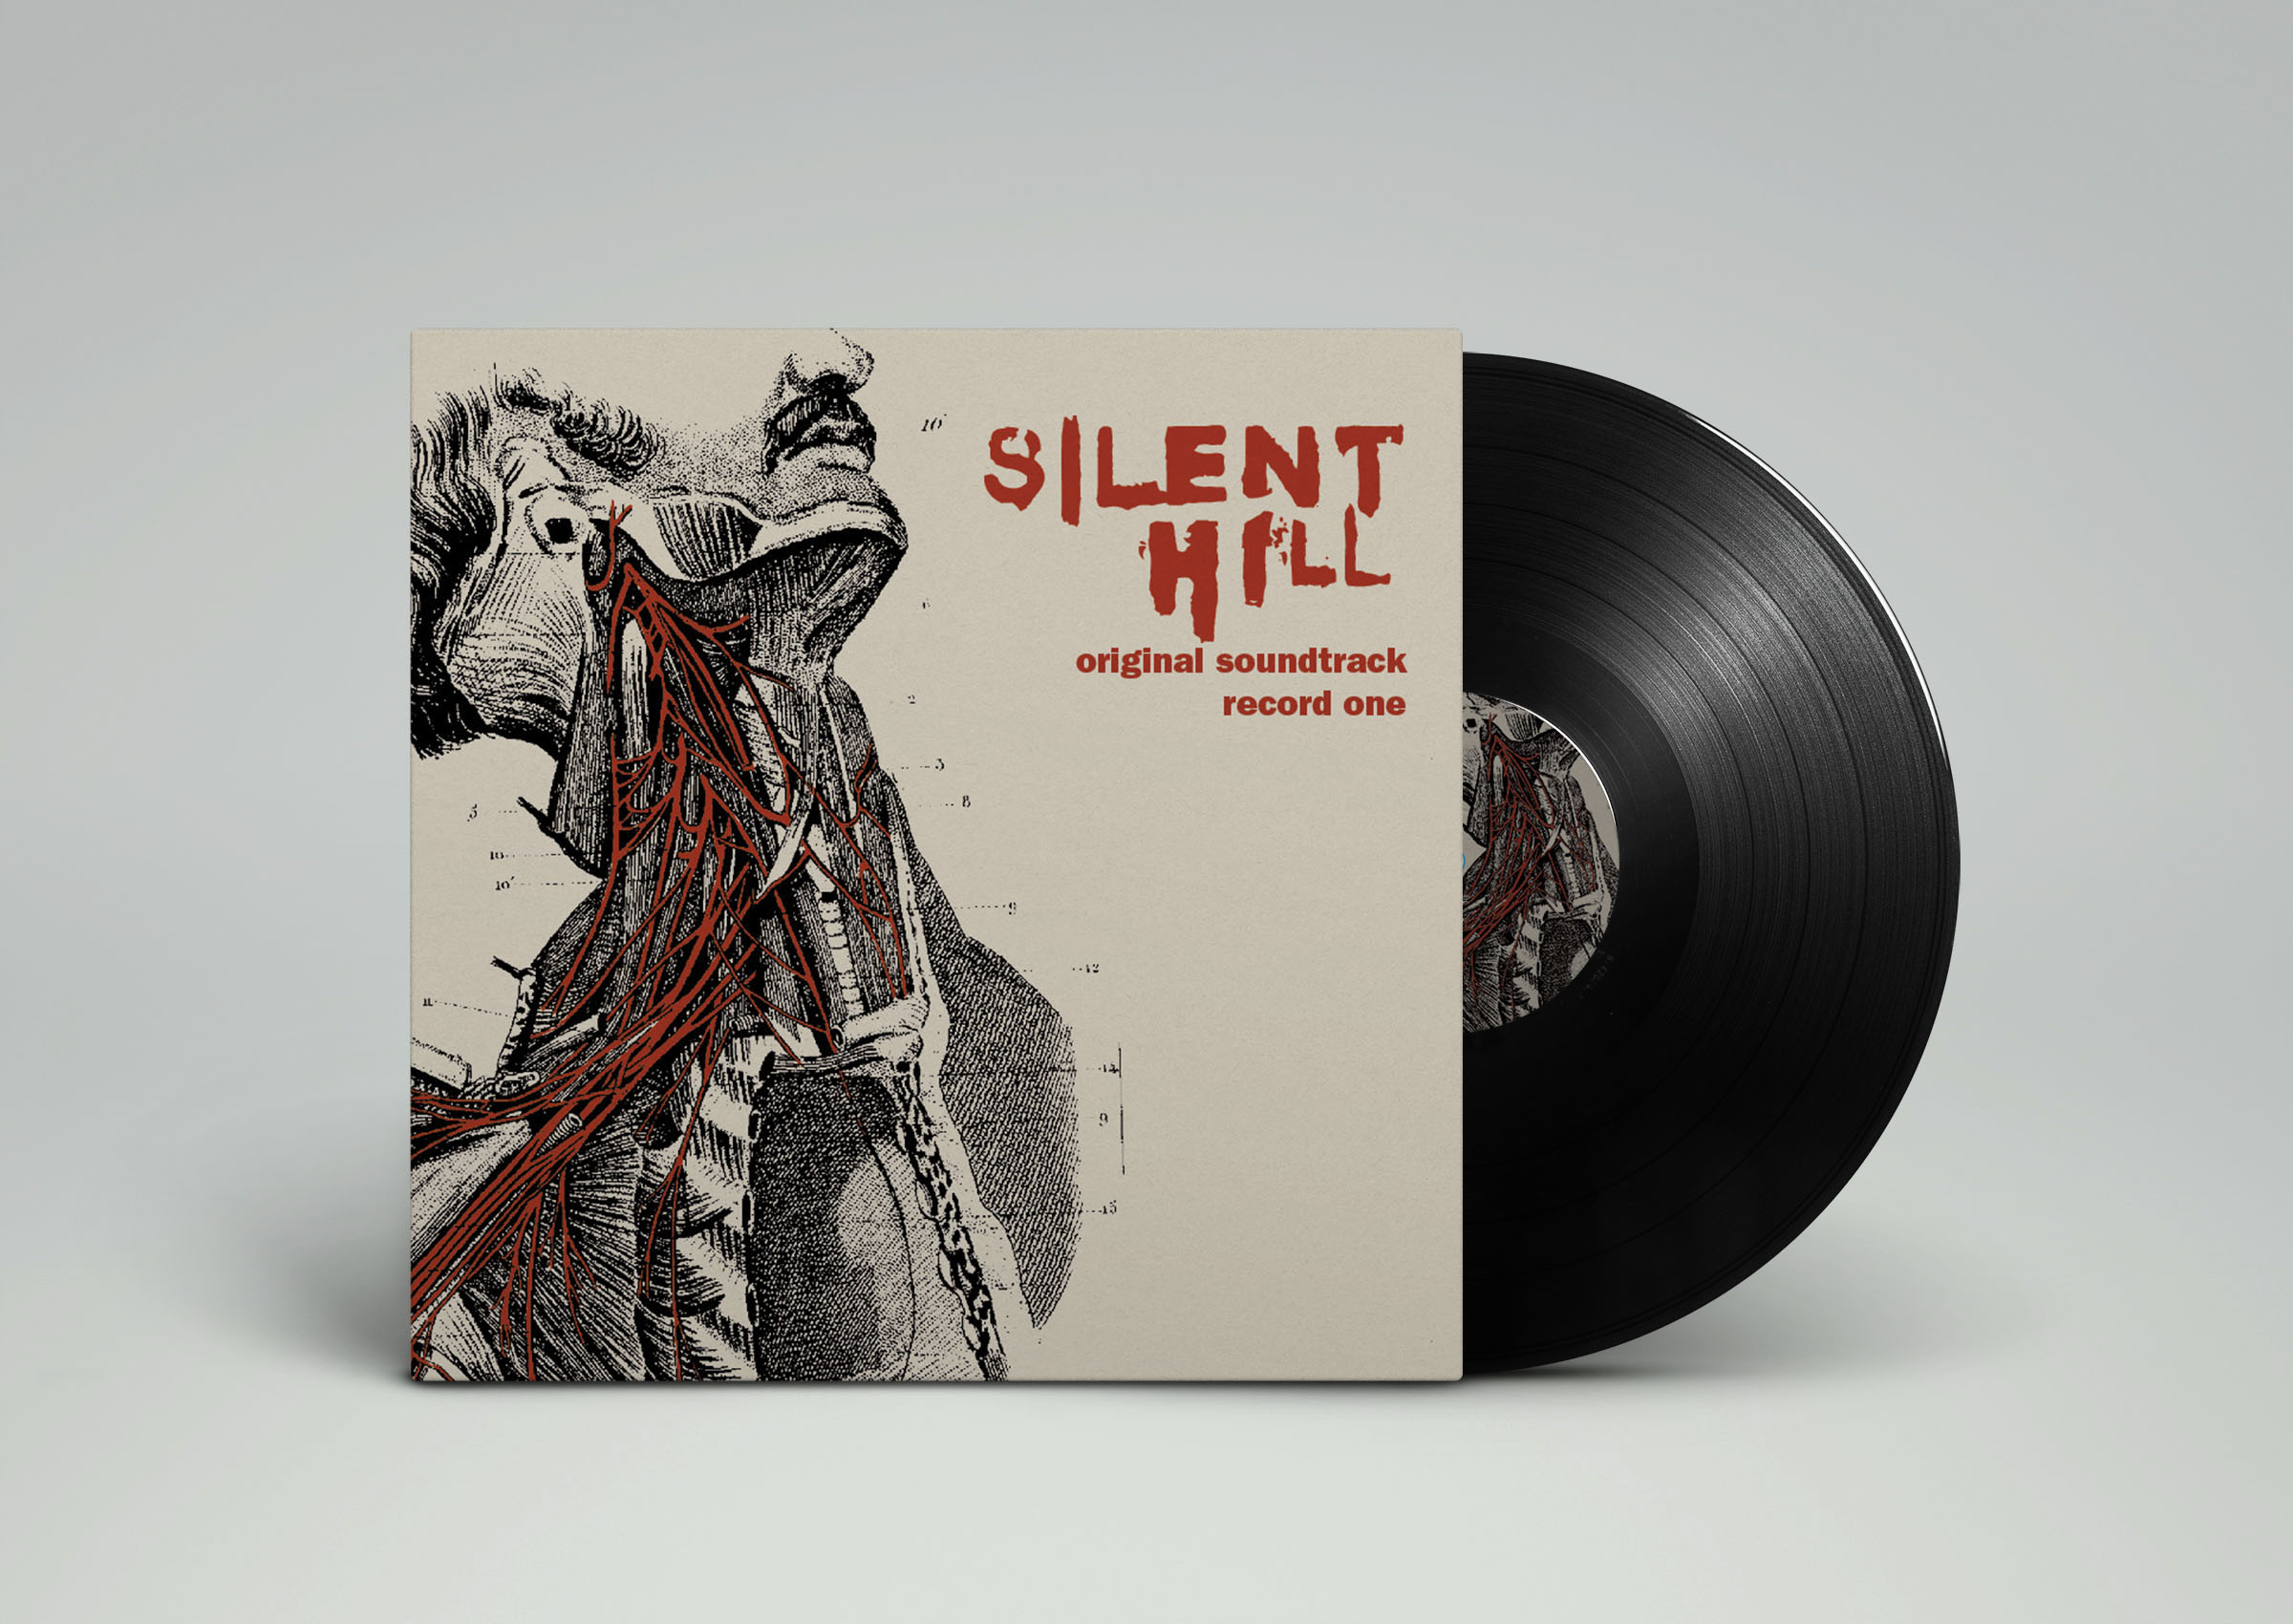 Саундтрек винил. Silent Hill виниловая пластинка.